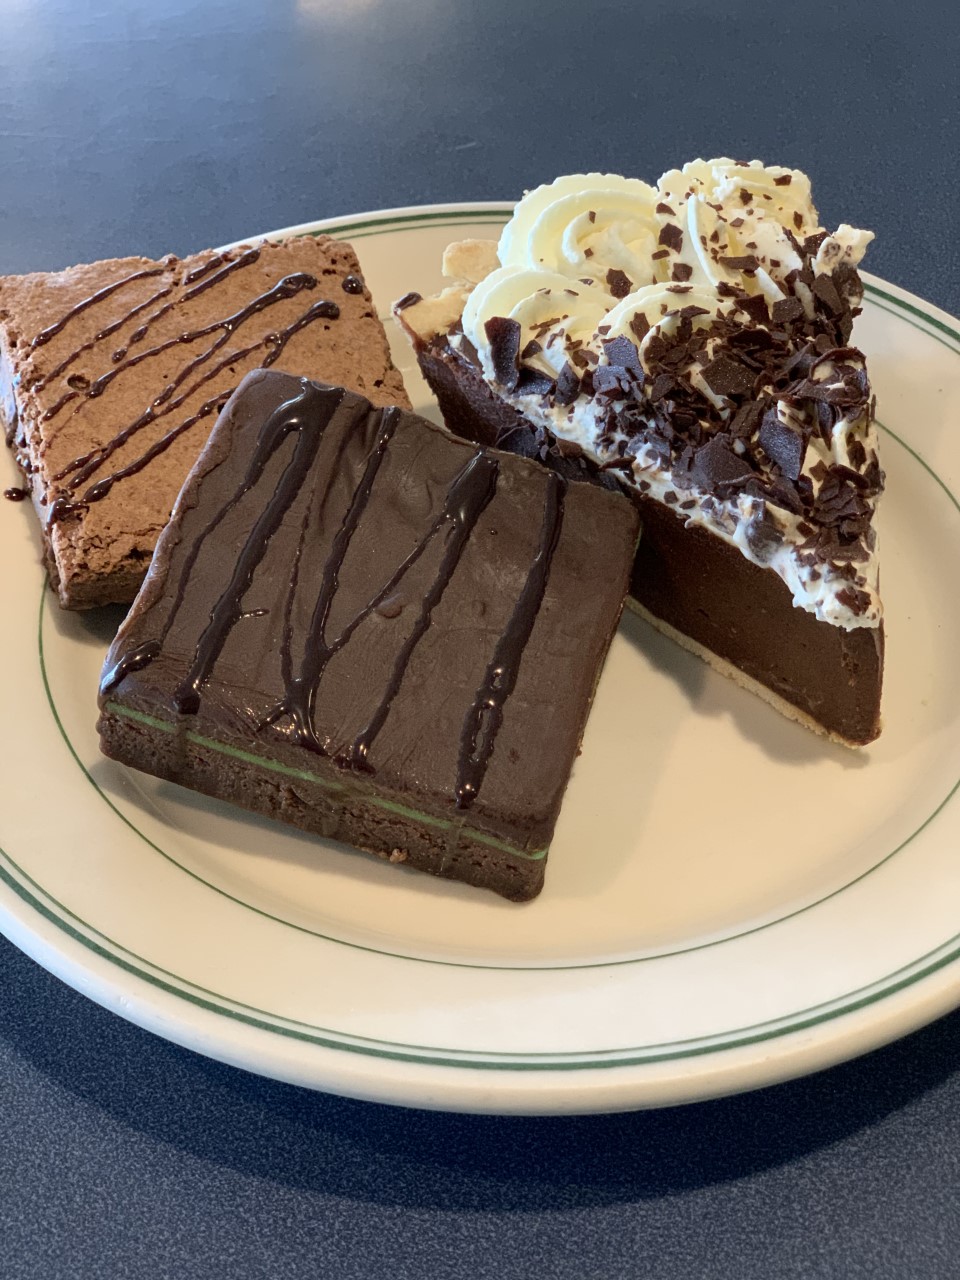 Three chocolate desserts on a plate.